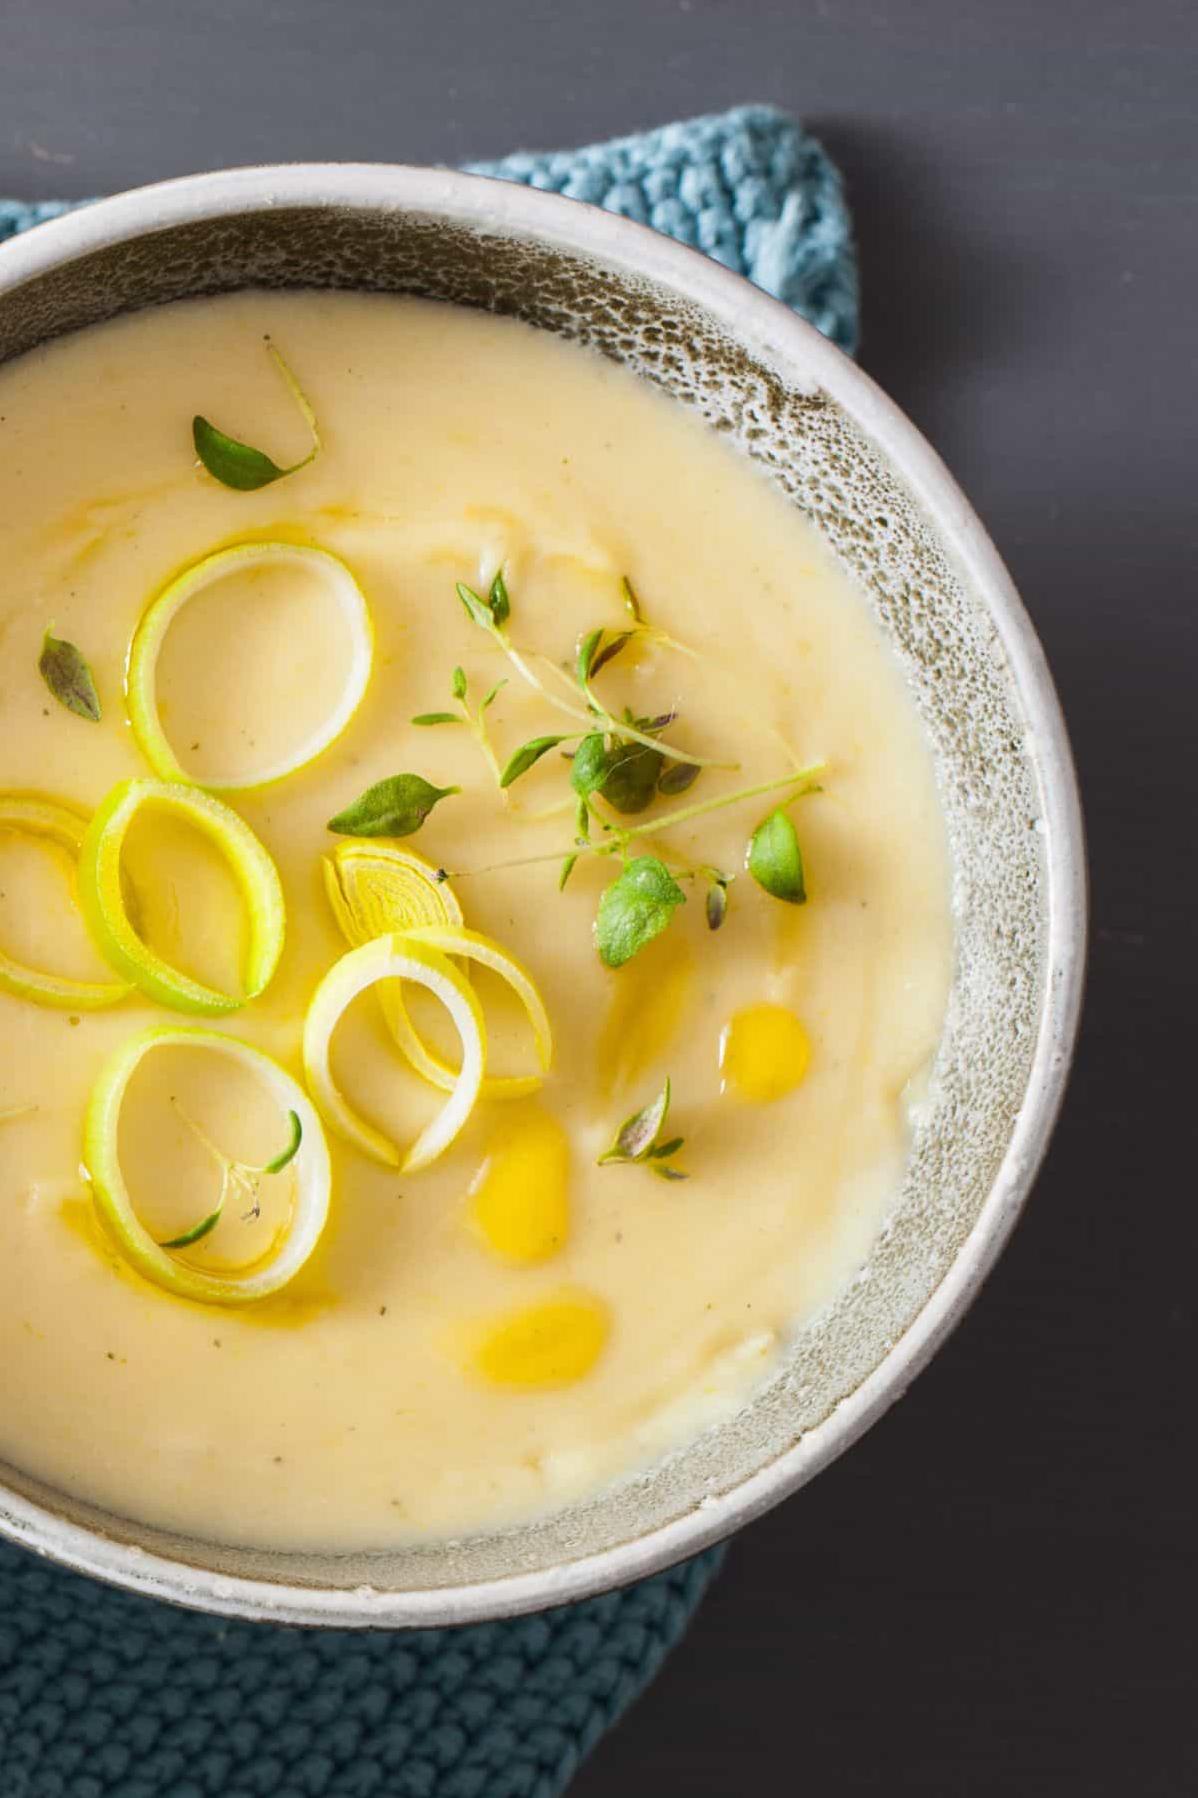  Creamy, vegan goodness in a bowl!